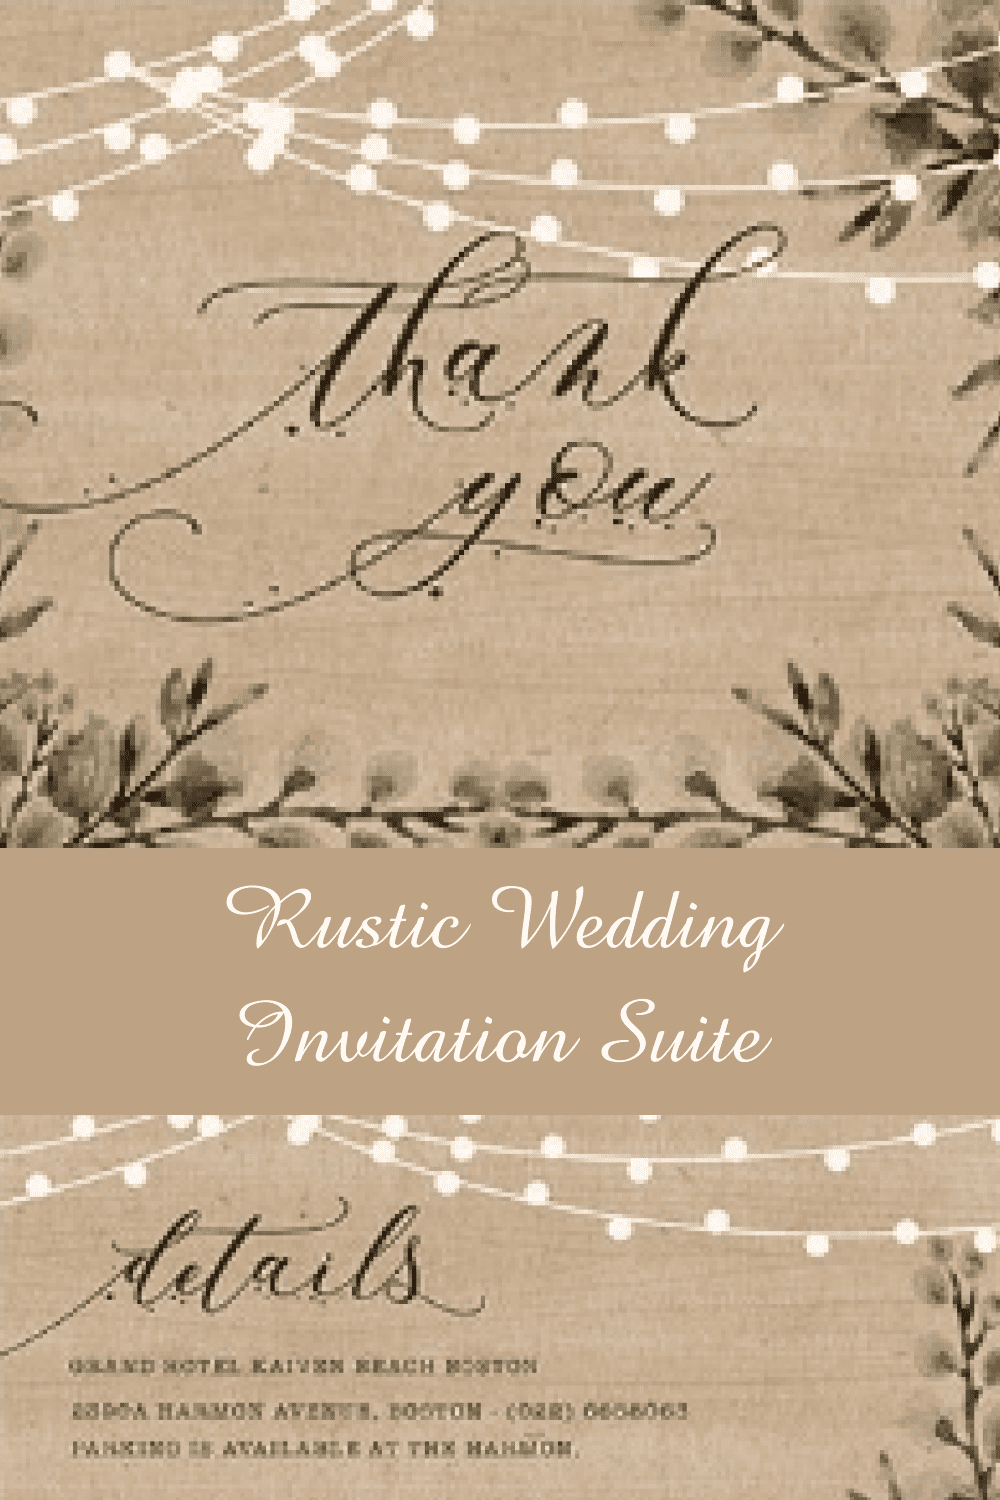 Rustic Wedding Invitation Suite Pinterest image.